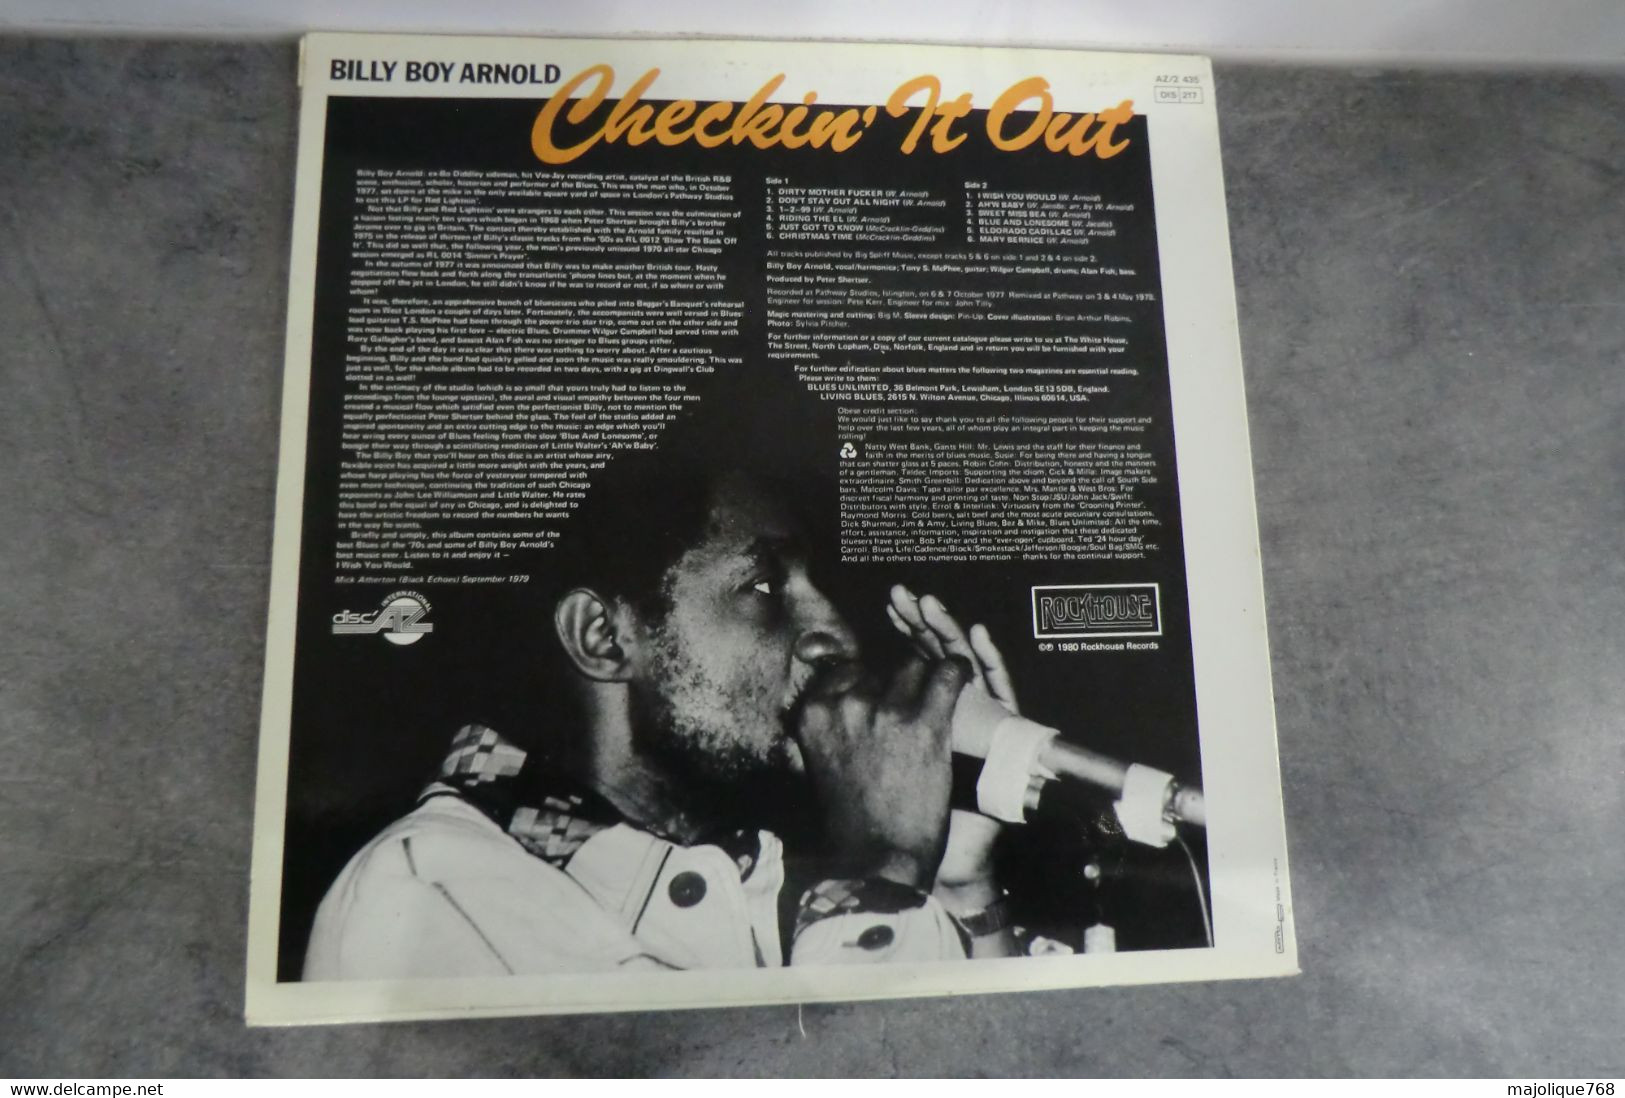 Disque De Billy Boy Arnold - Checkin It Out -  Rockhouse ‎– AZ/2 435 - France 1982 - Blues